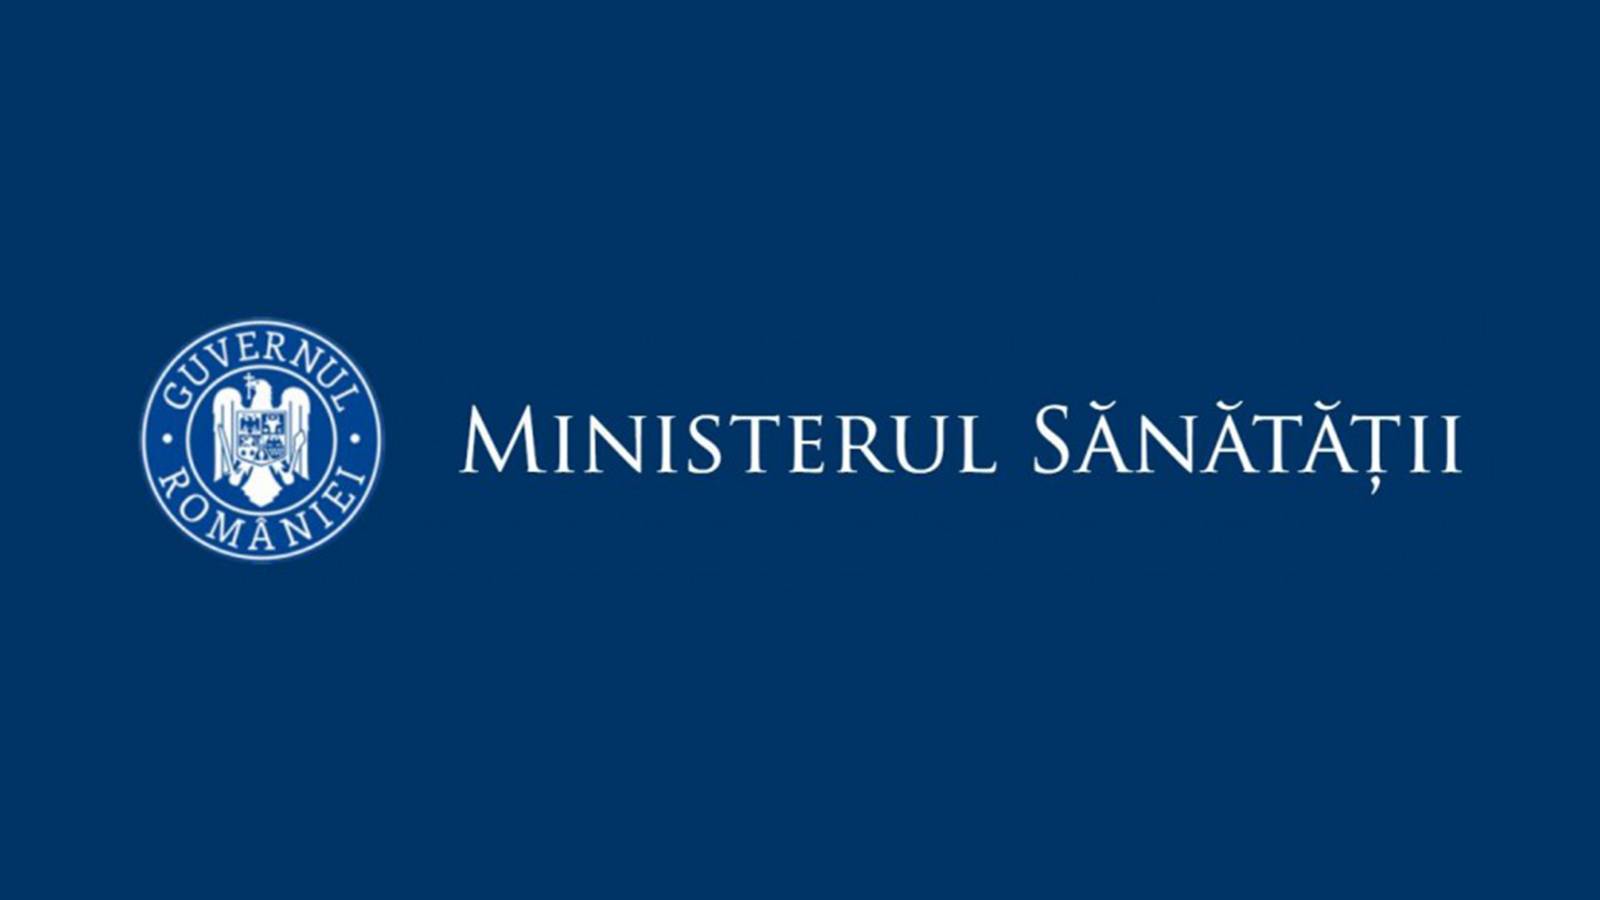 Ministerul Sanatatii ratele incidenta judetele romania